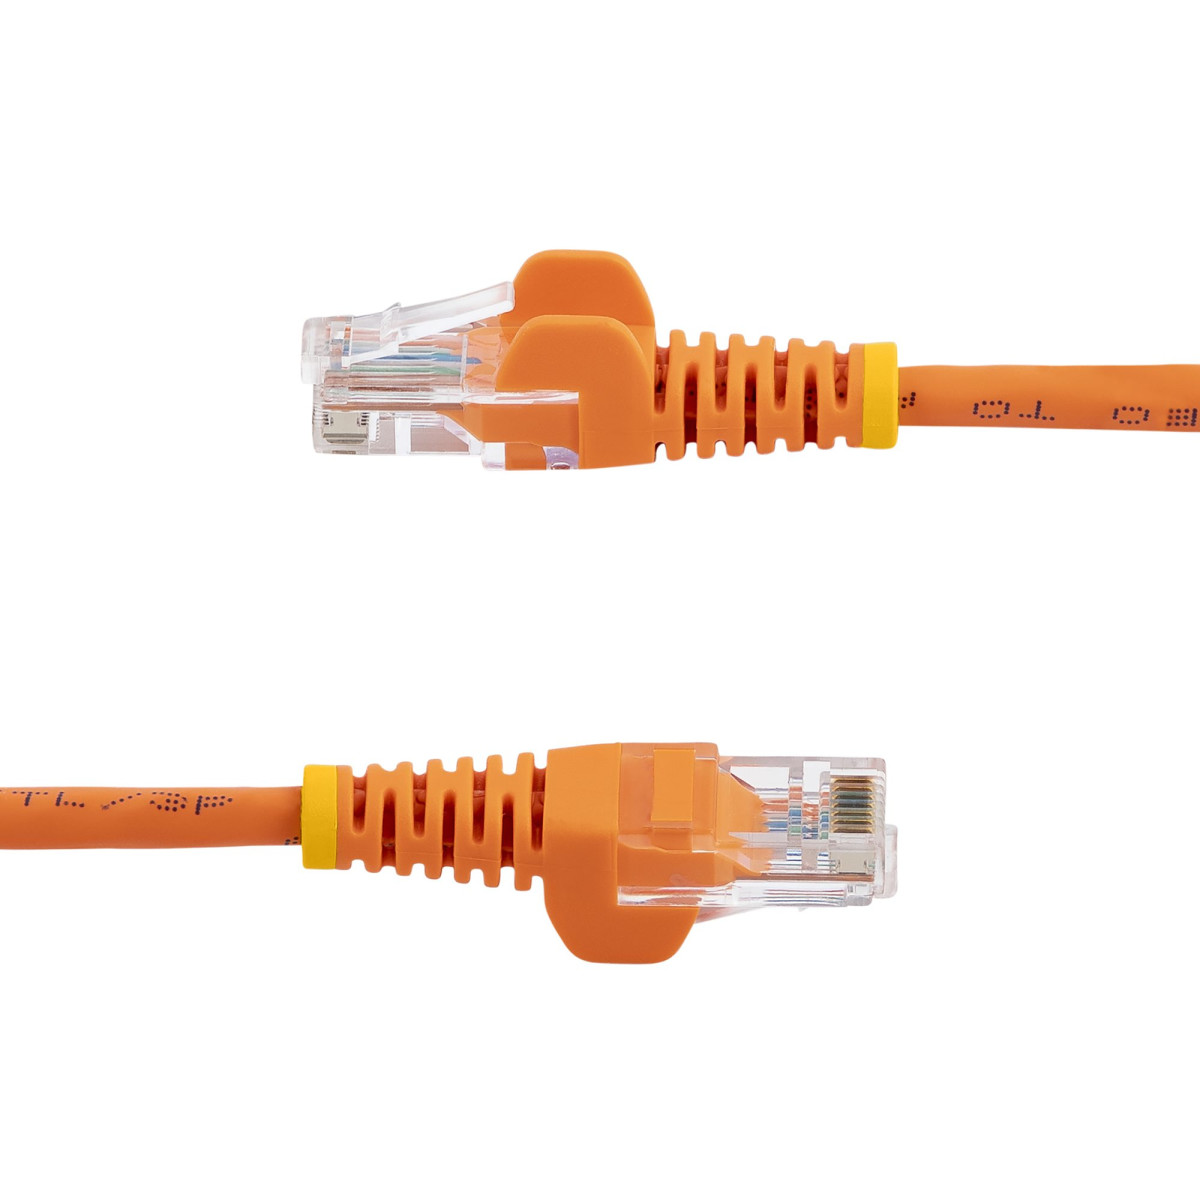 Orange Snagless Cat5e Patch Cable 5m